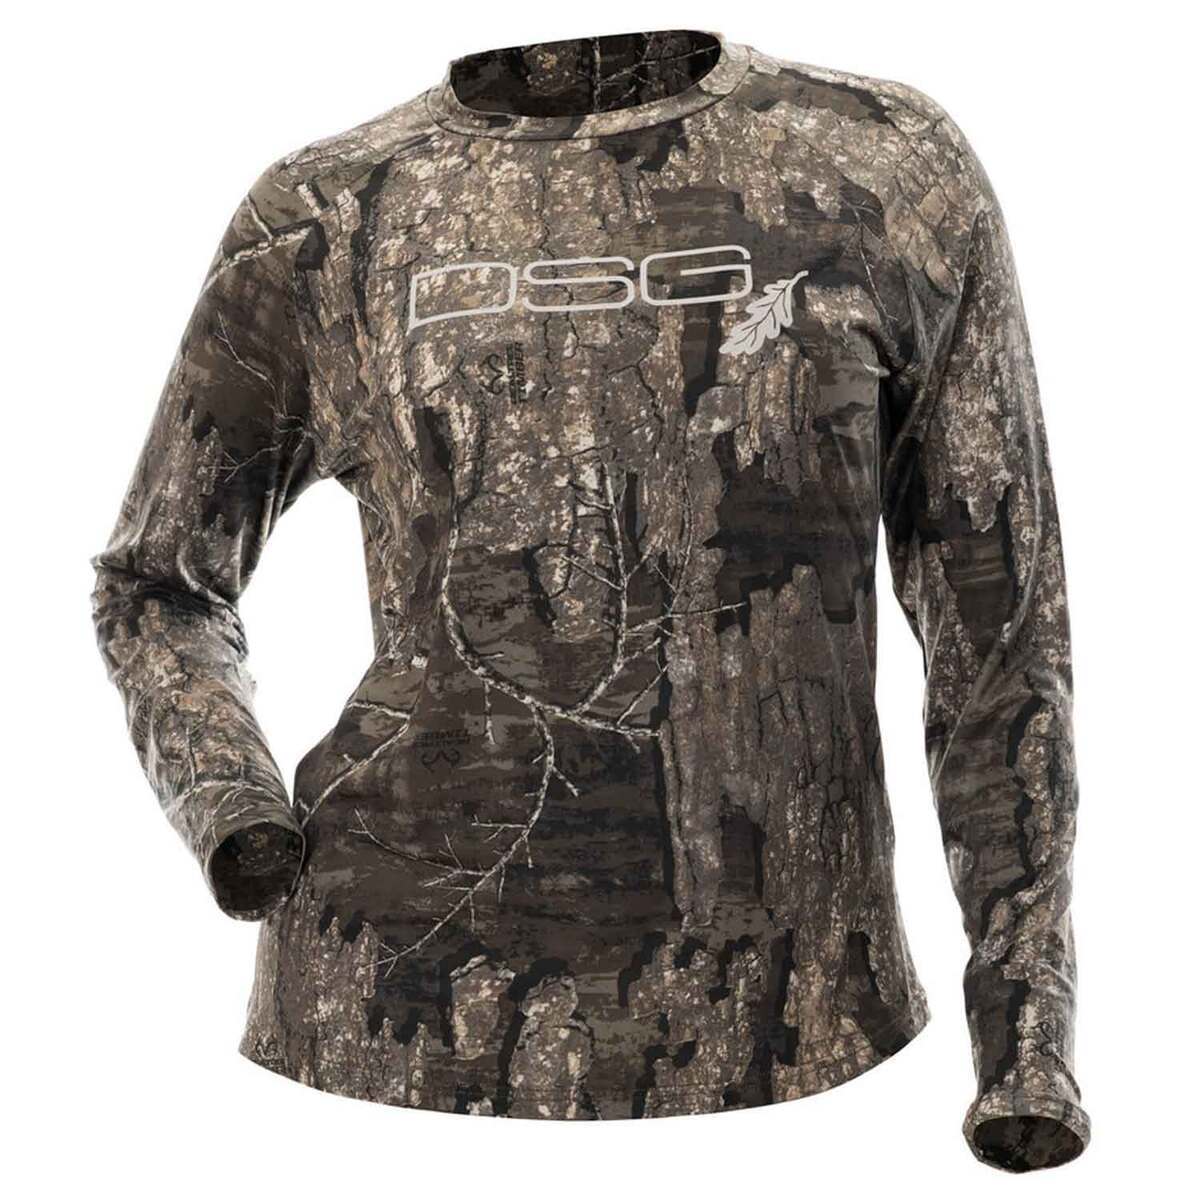 HOT SHOT Men’s Camo Hunting Long Sleeve Shirt – Quick Dry Performance Shirt  at  Men’s Clothing store